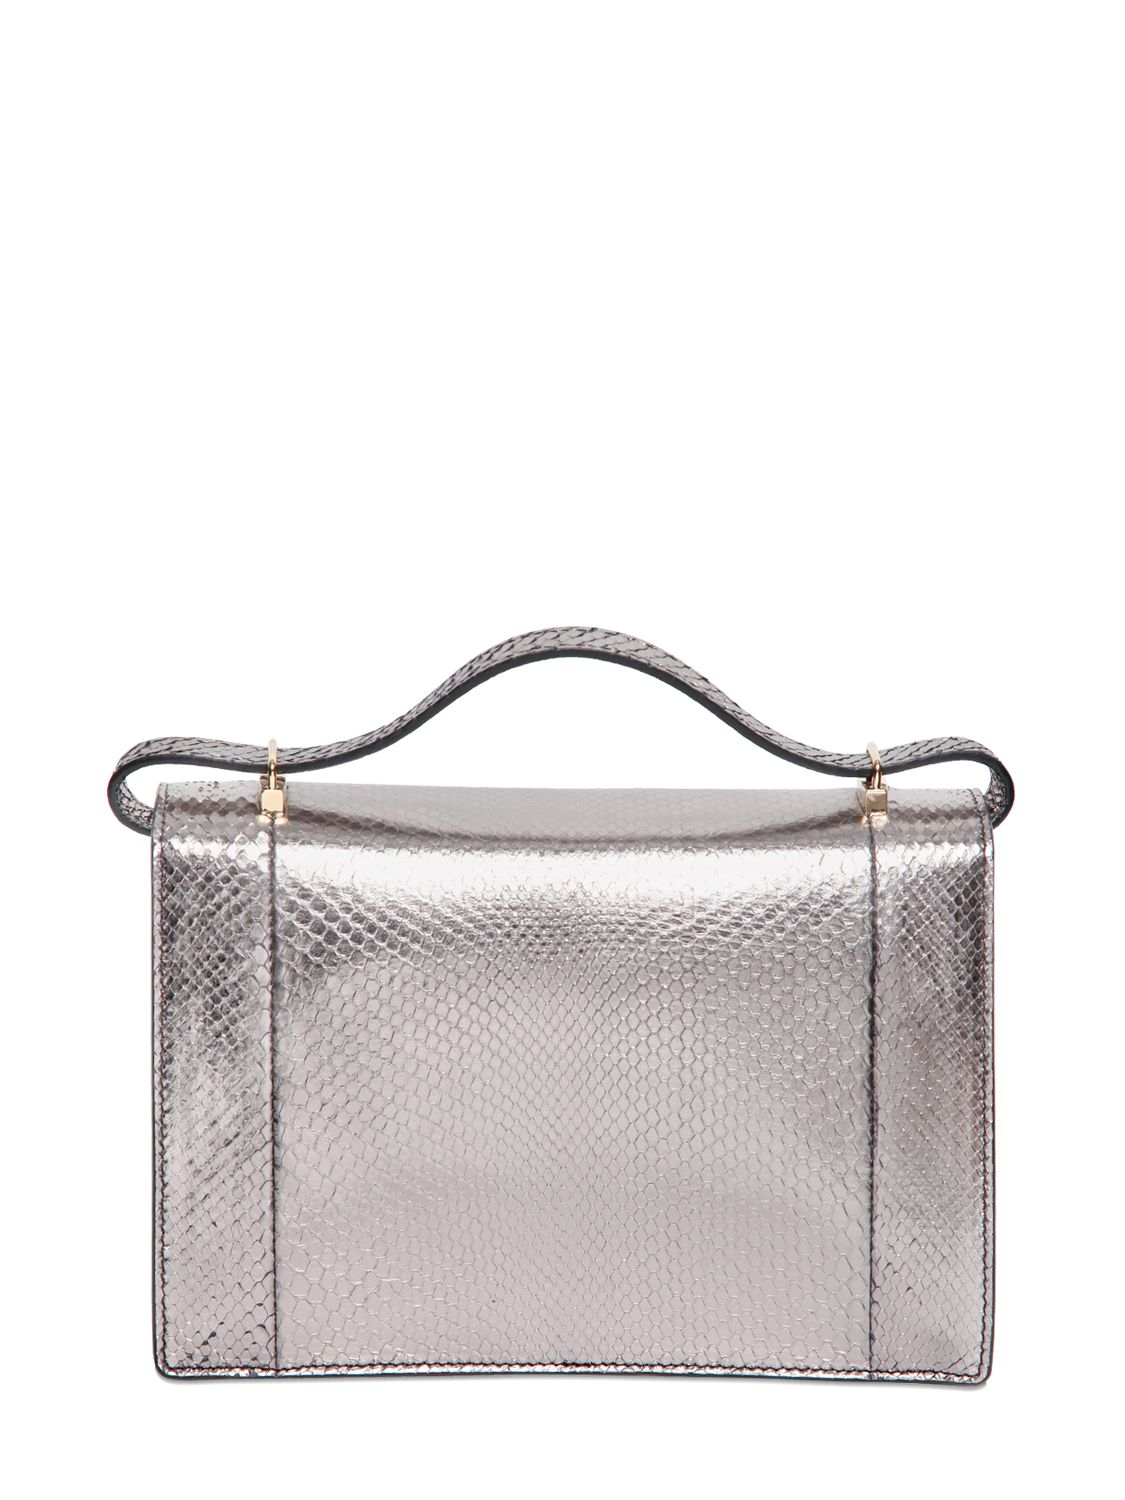 Giorgio Armani Metallic Python Shoulder Bag - Lyst